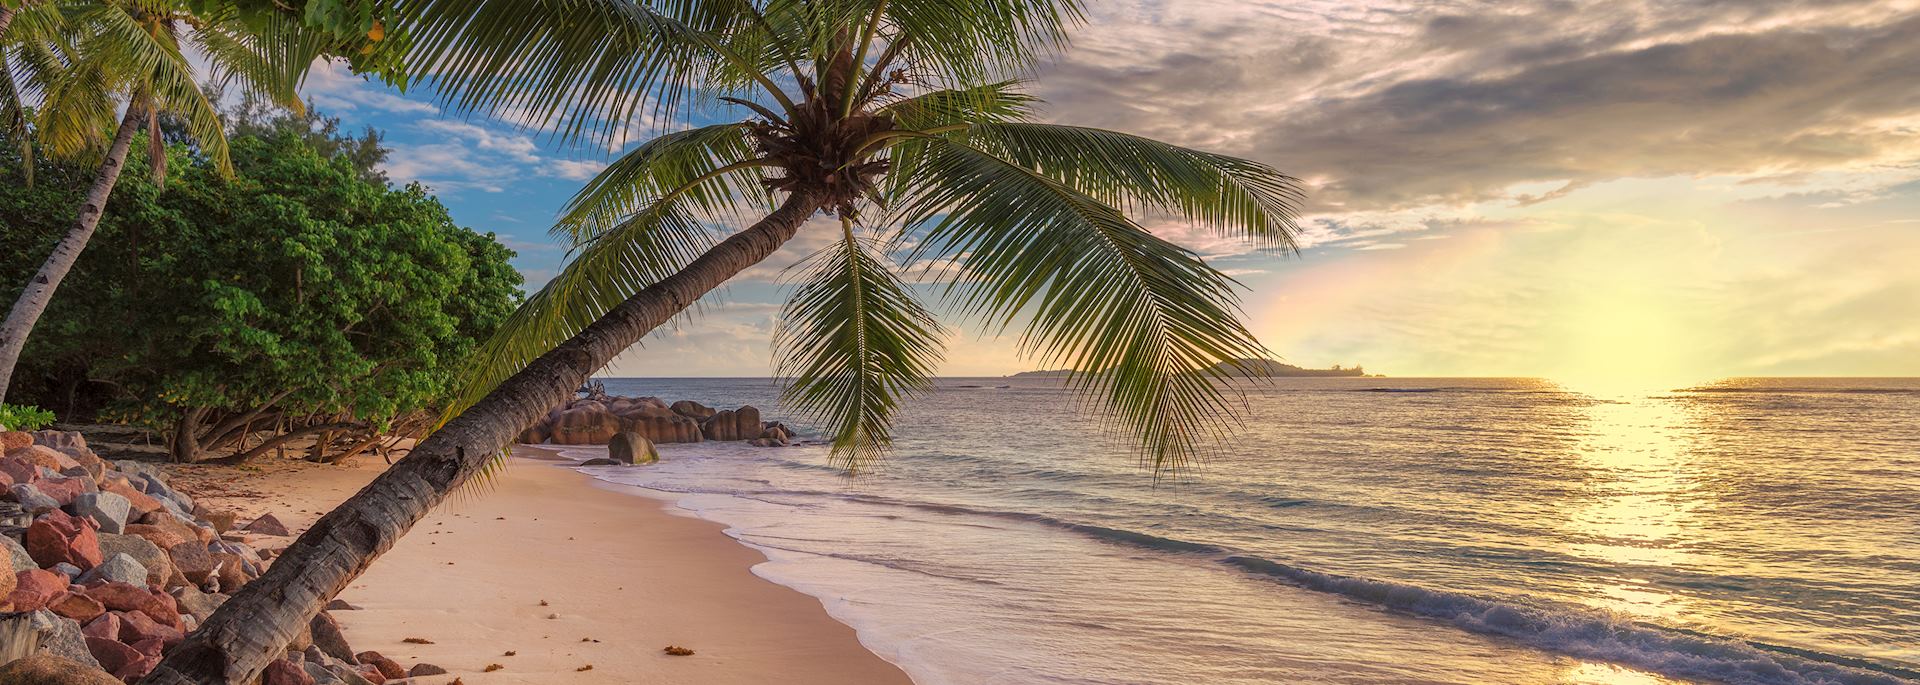 Beach in Jamaica, Caribbean